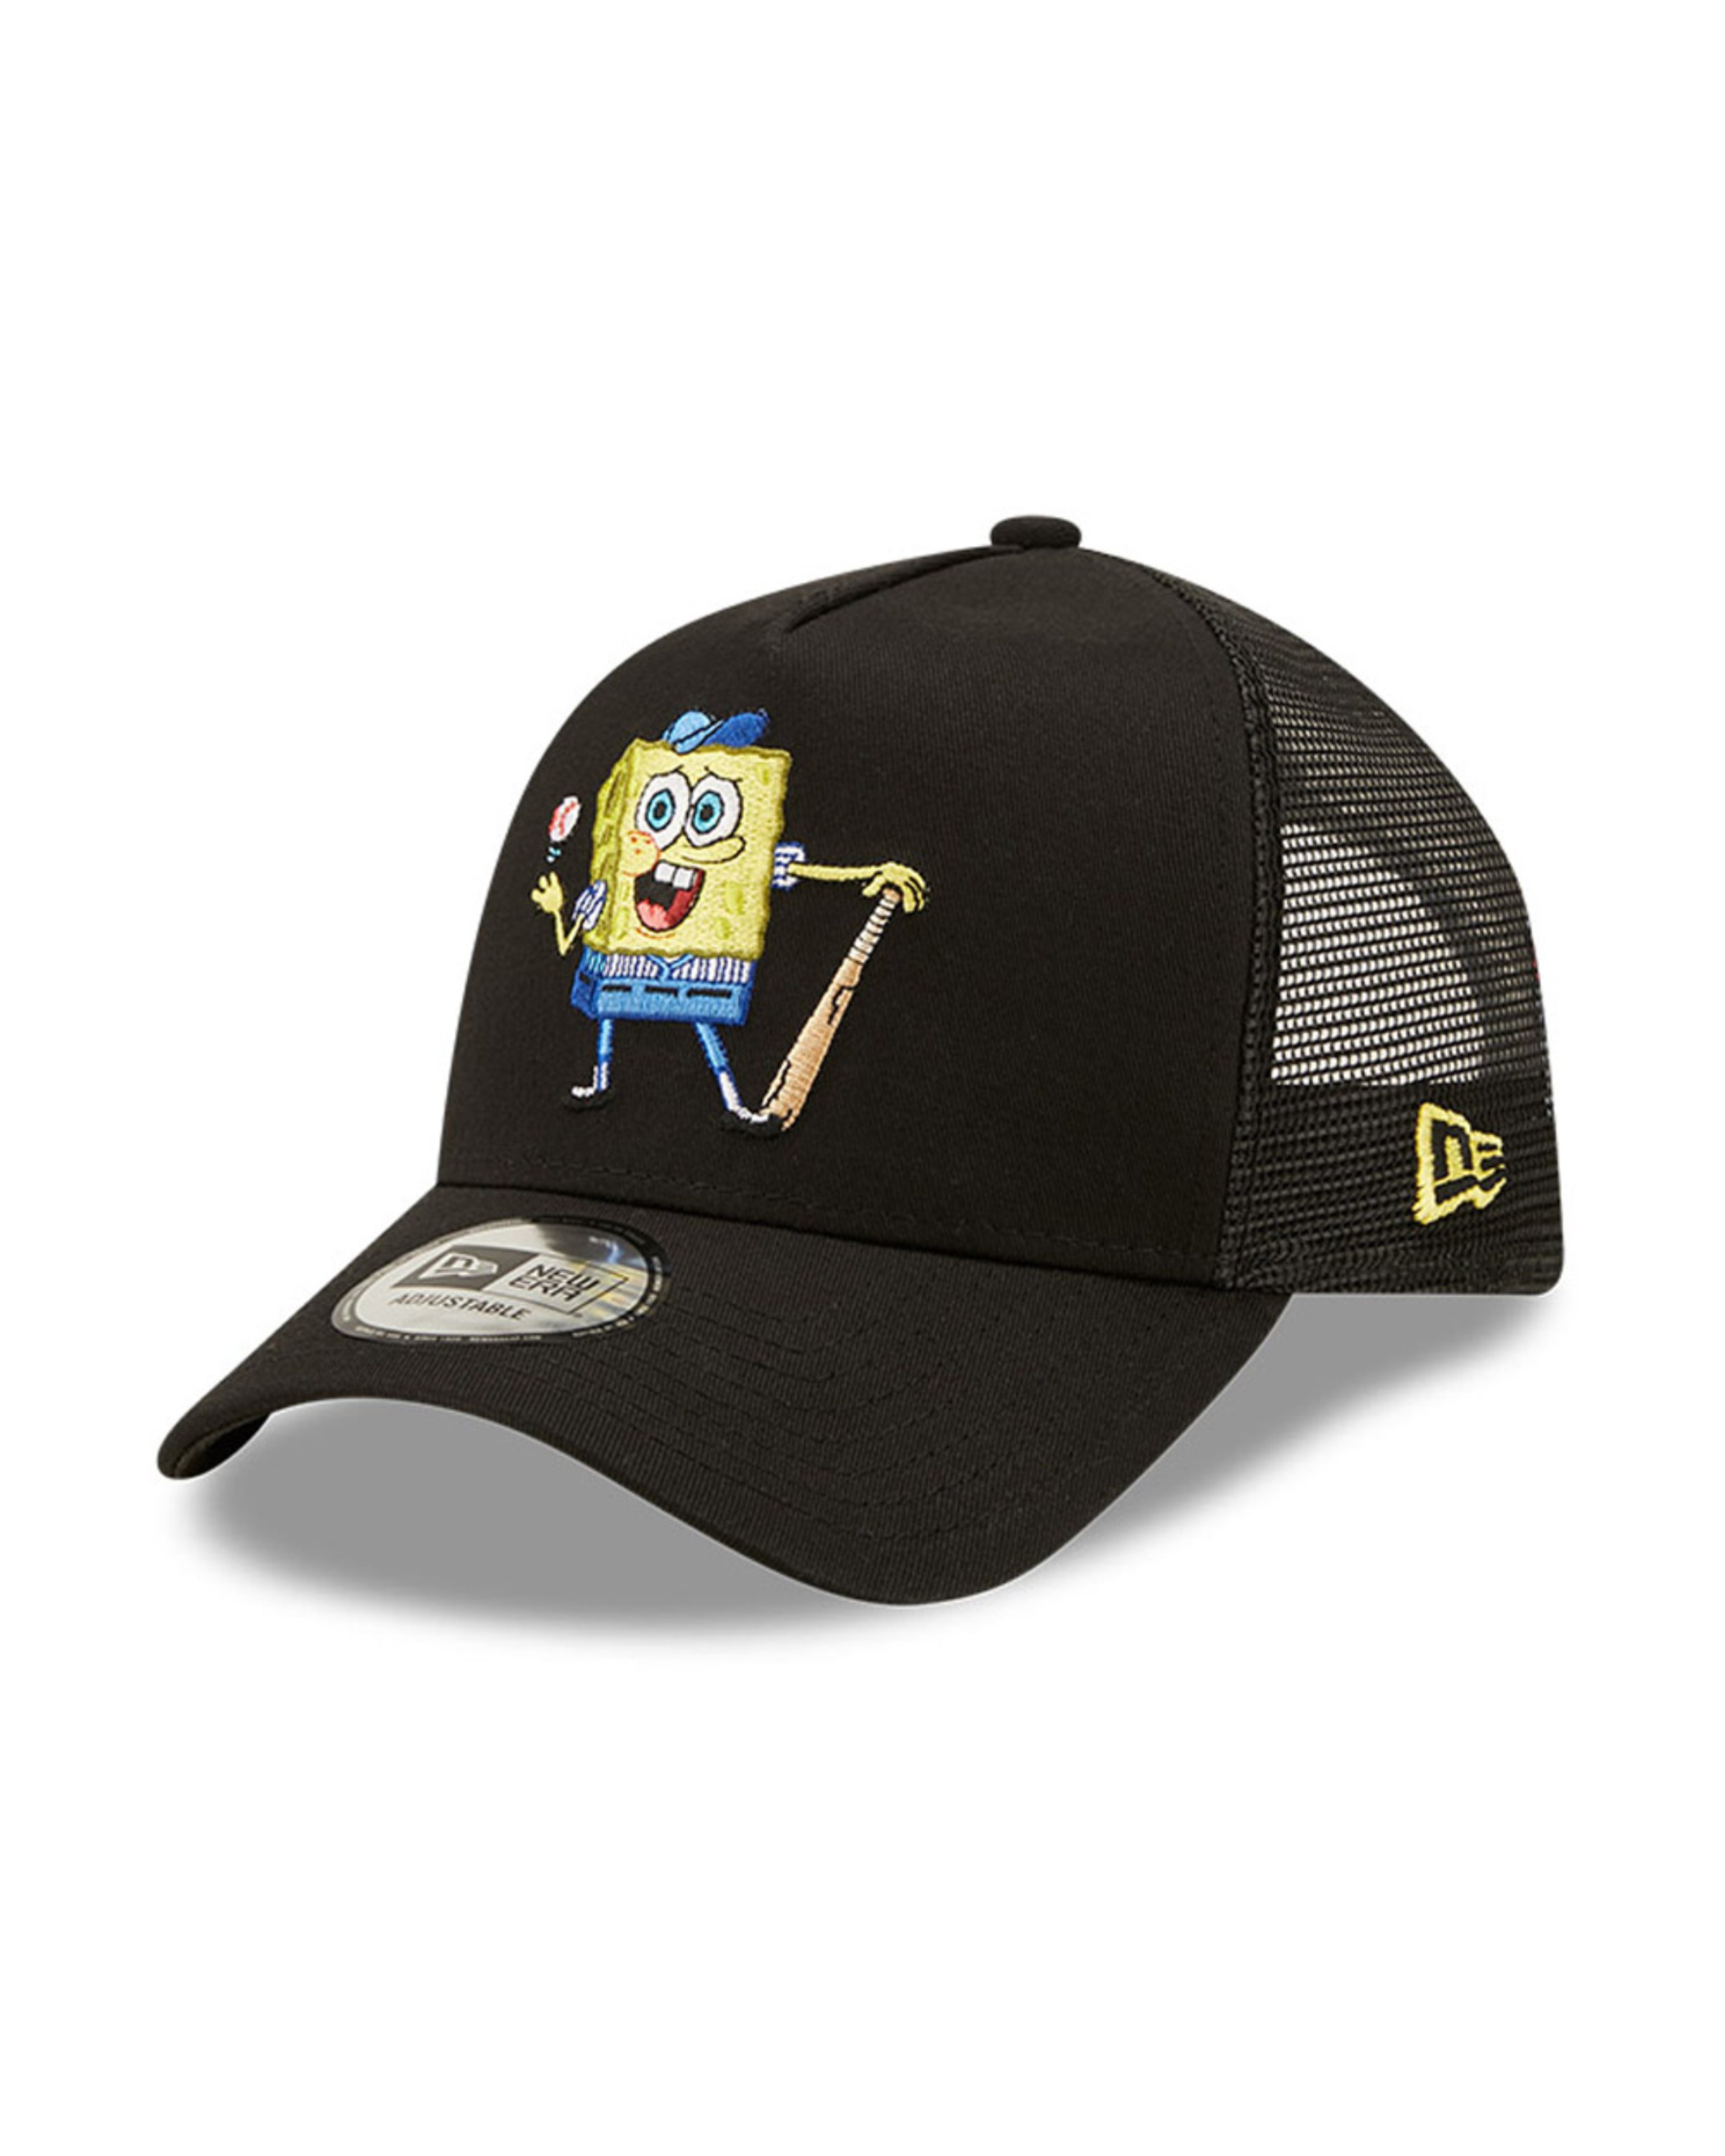 Spongebob Nickelodeon Black A-Frame Trucker Cap